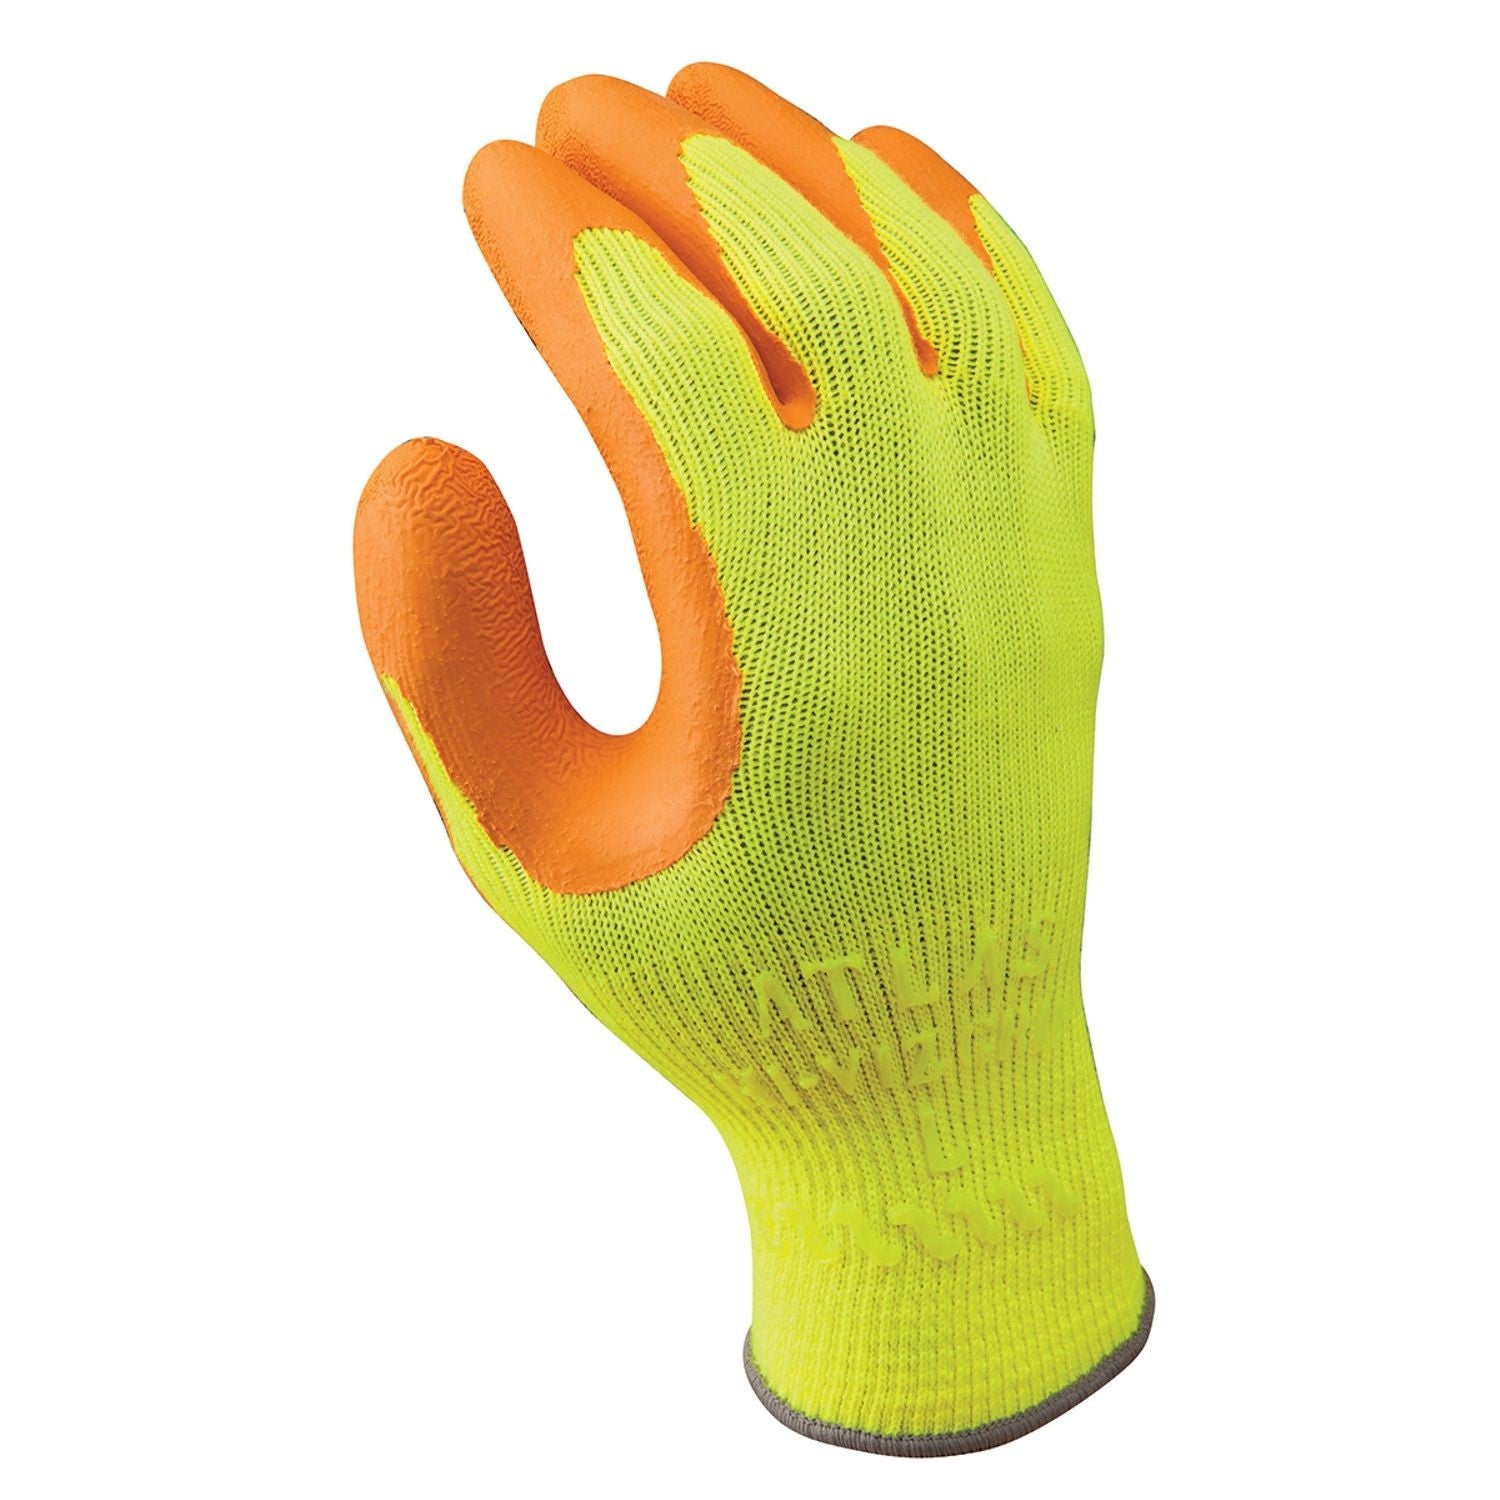 SHOWA® ATLAS® 317/L Hi-Viz General Purpose Coated Gloves